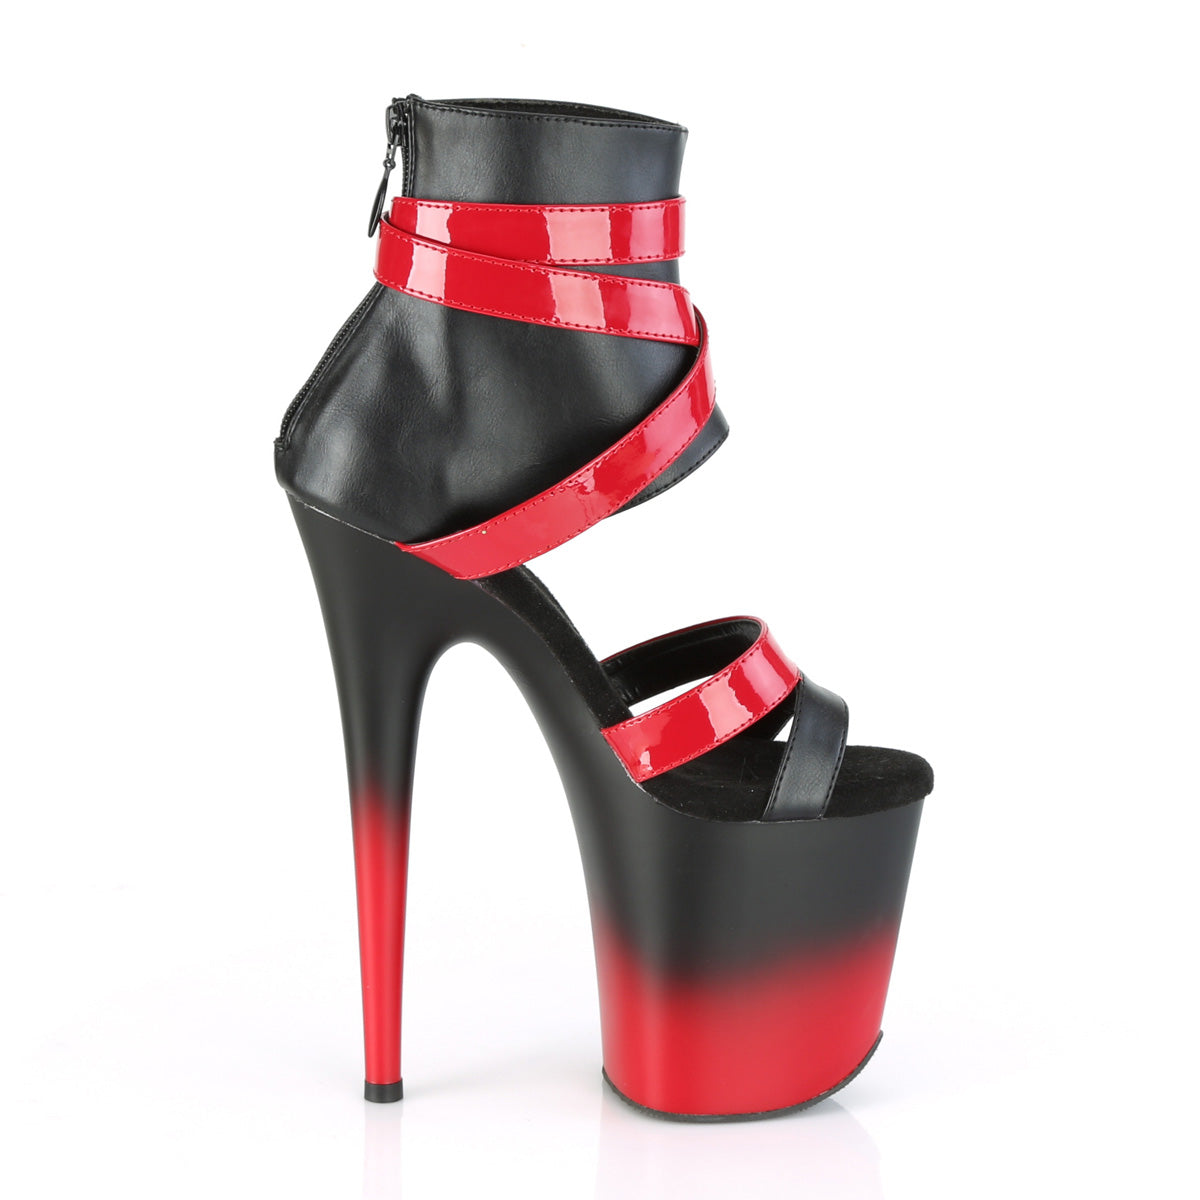 FLAMINGO-800-15 Black & Red Calf High Peep Toe High Heel